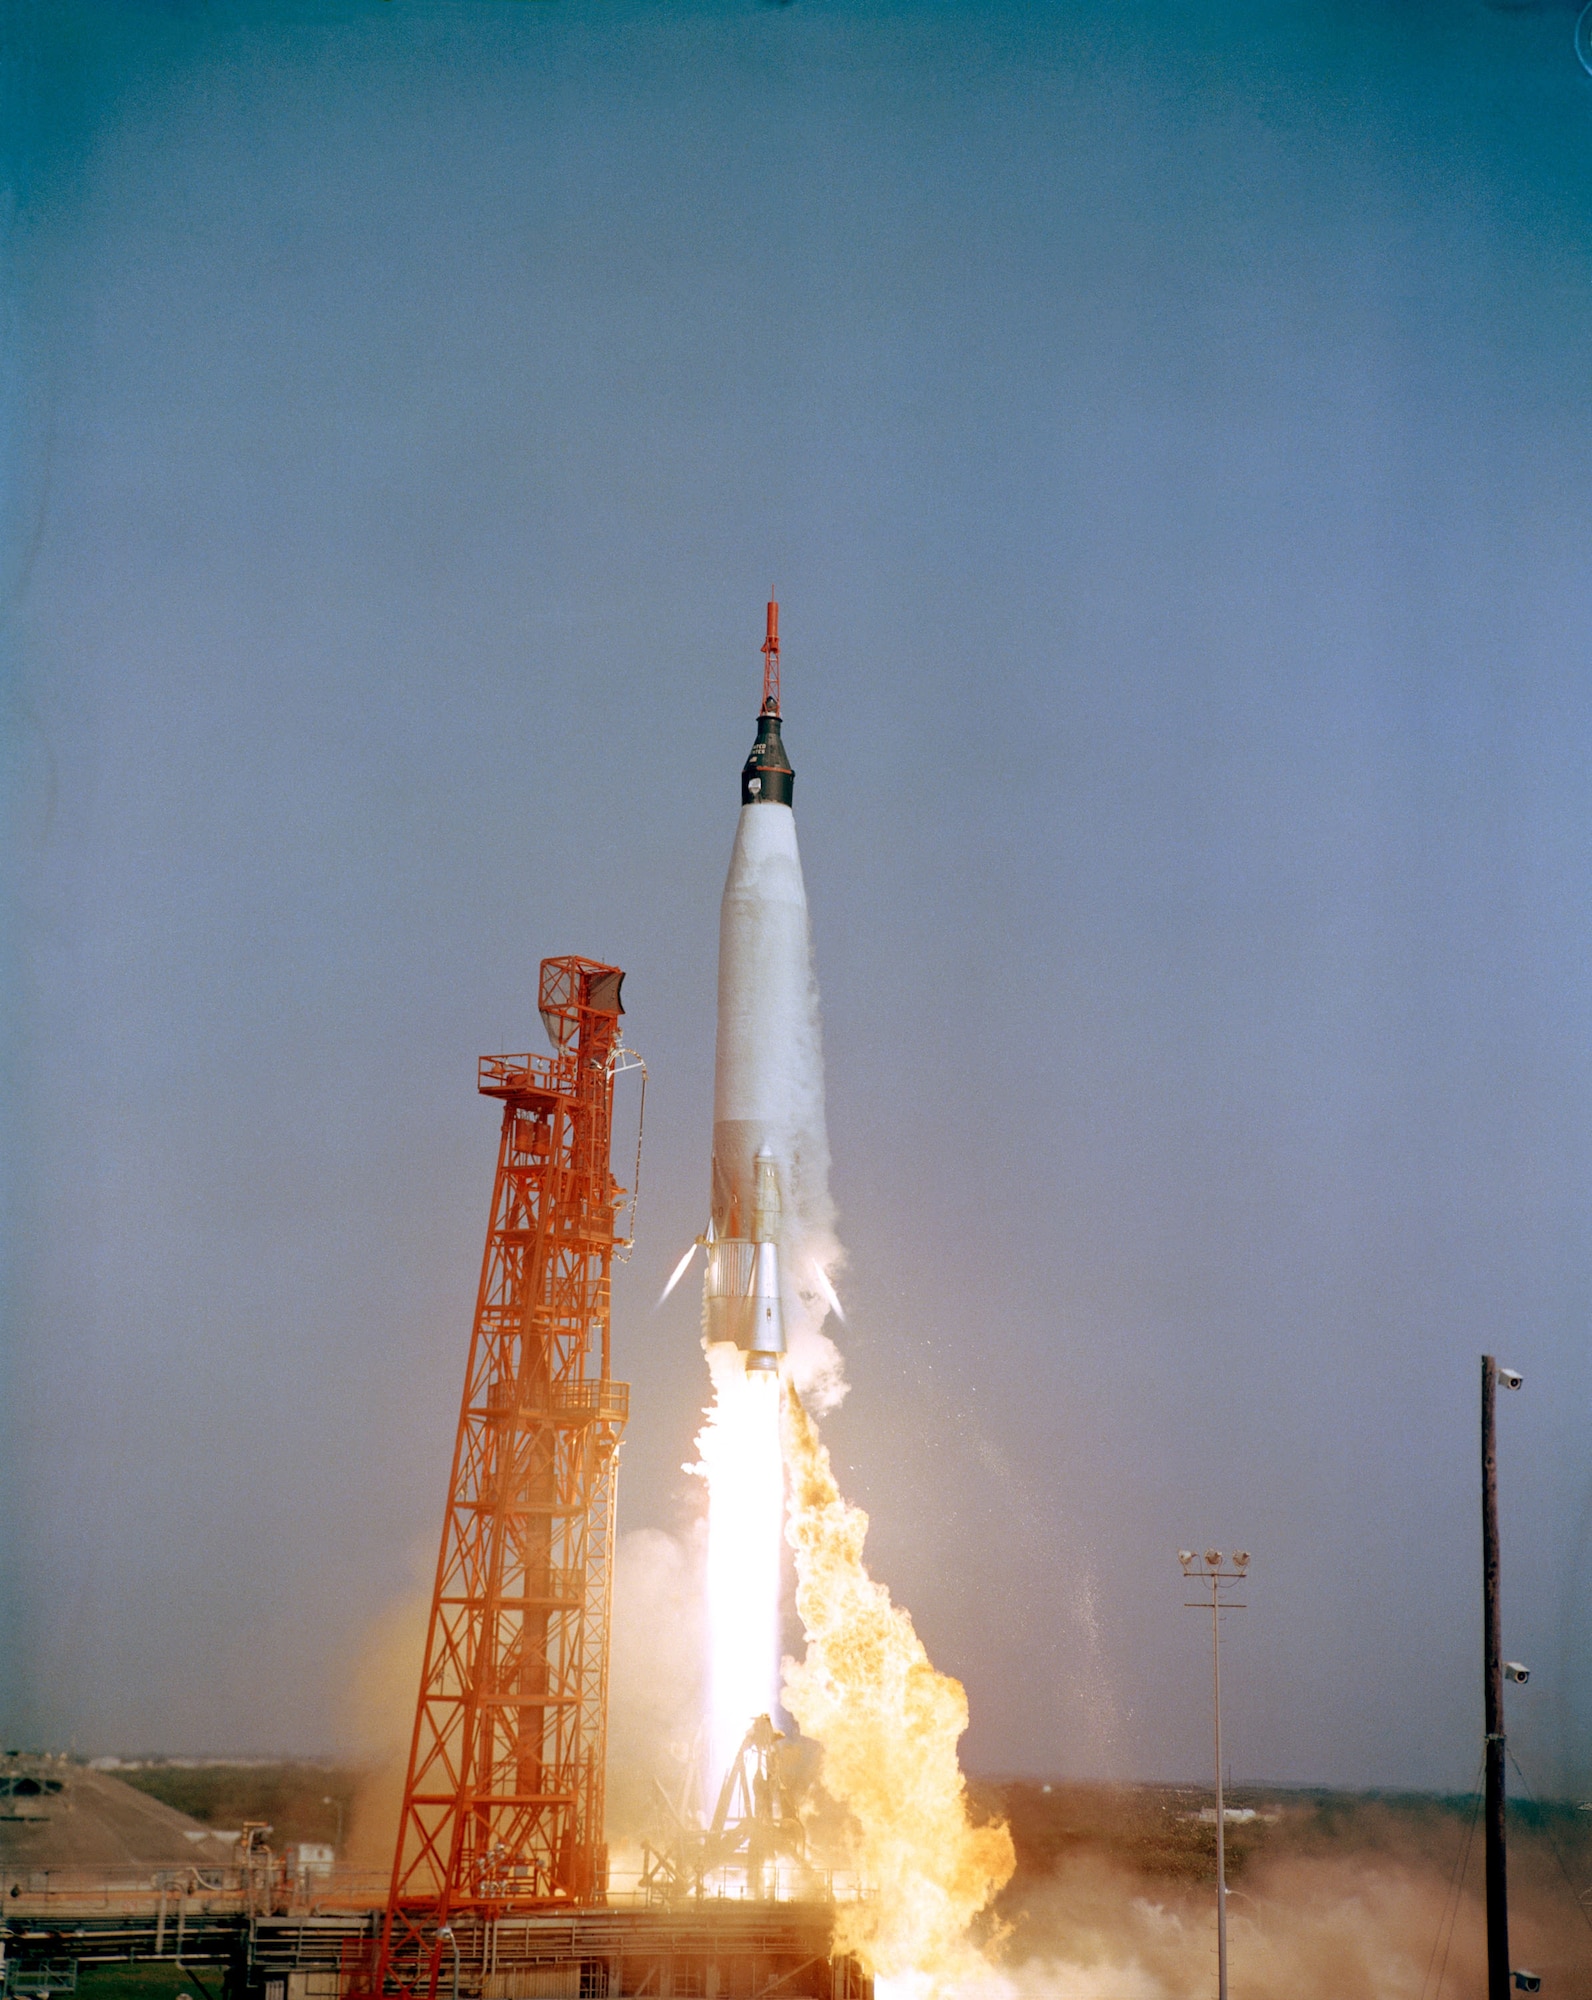 Liftoff of Mercury Atlas 9